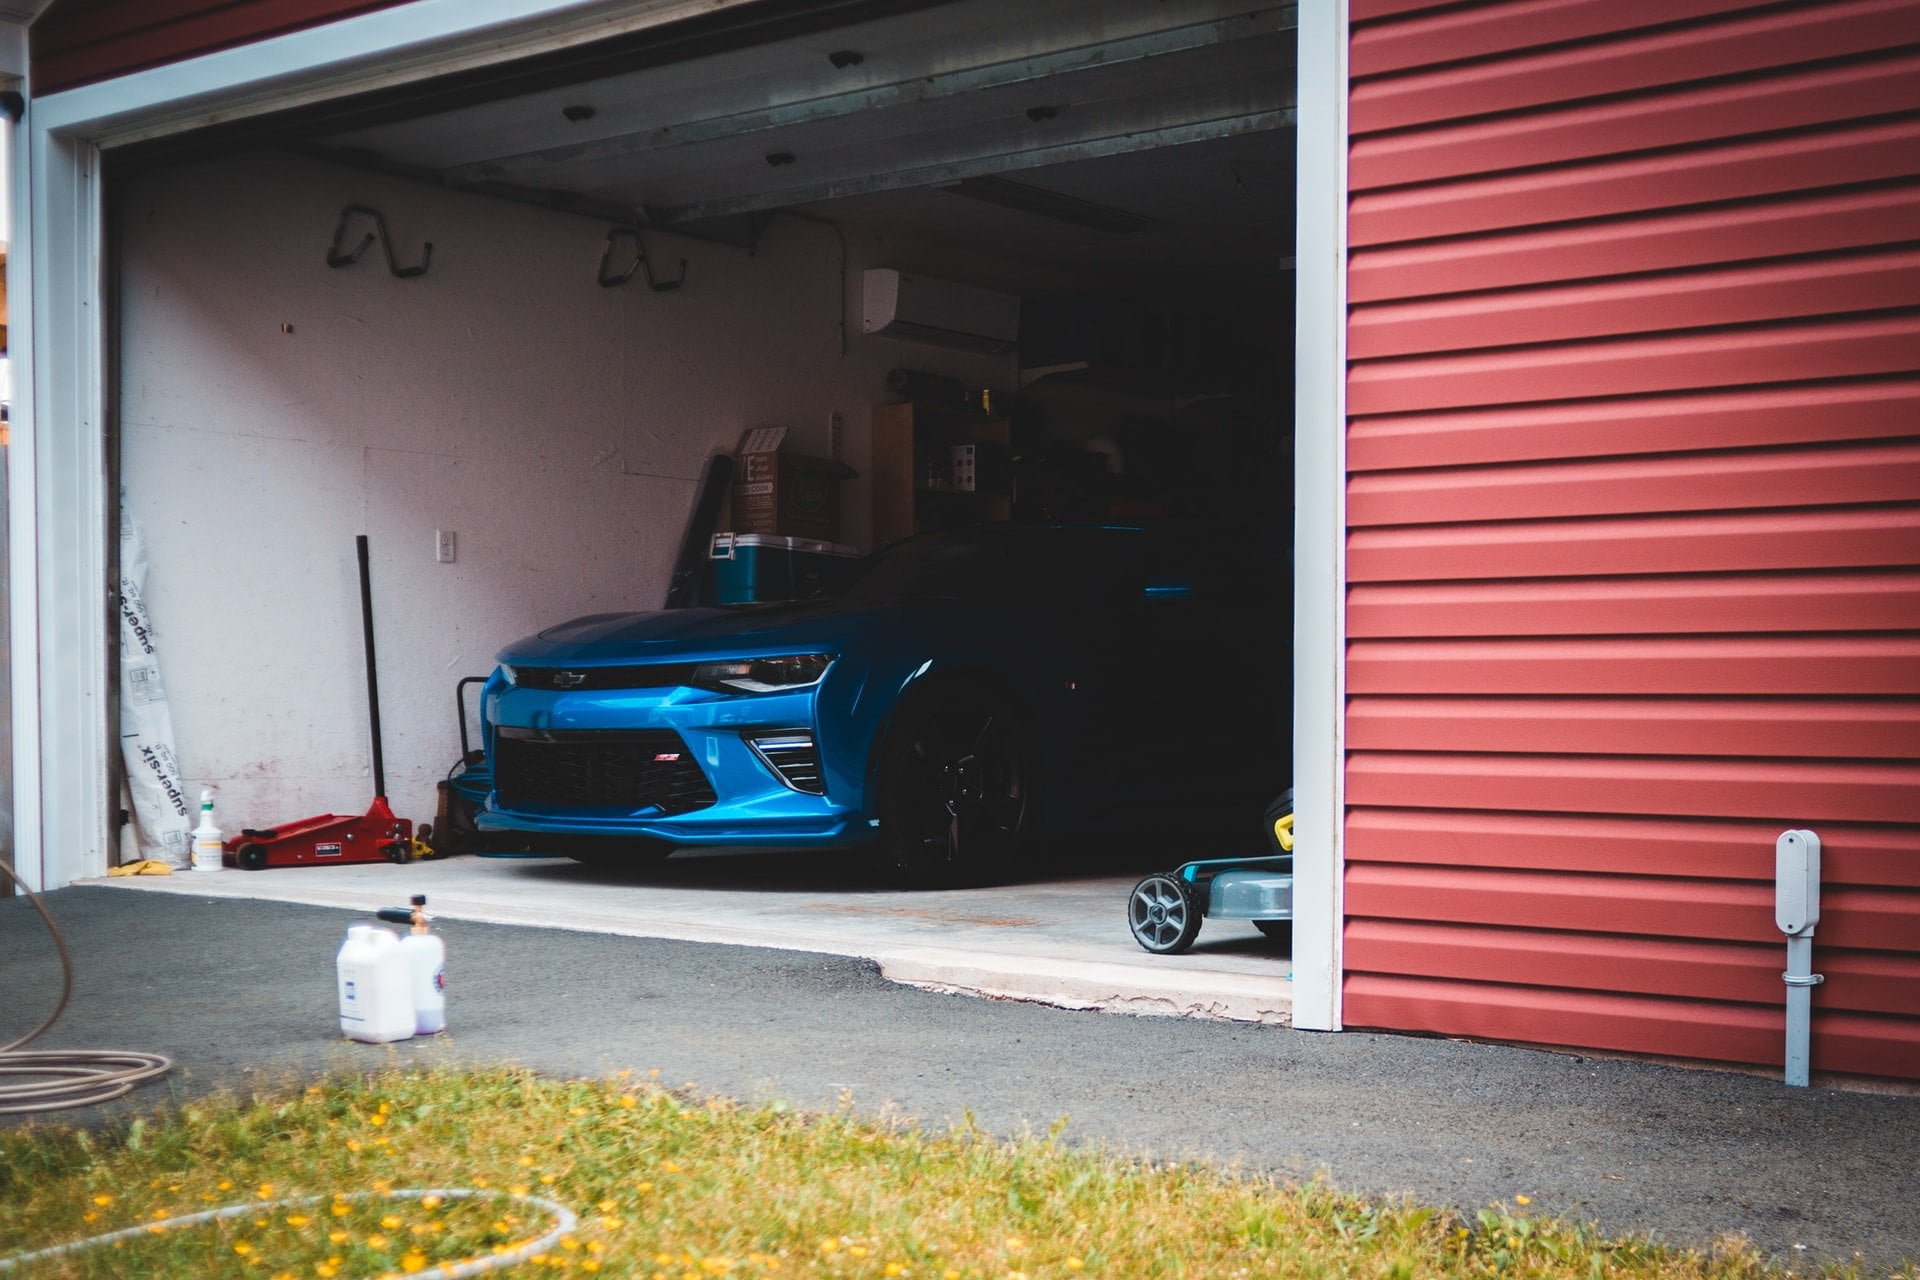 a garage door with a blue car